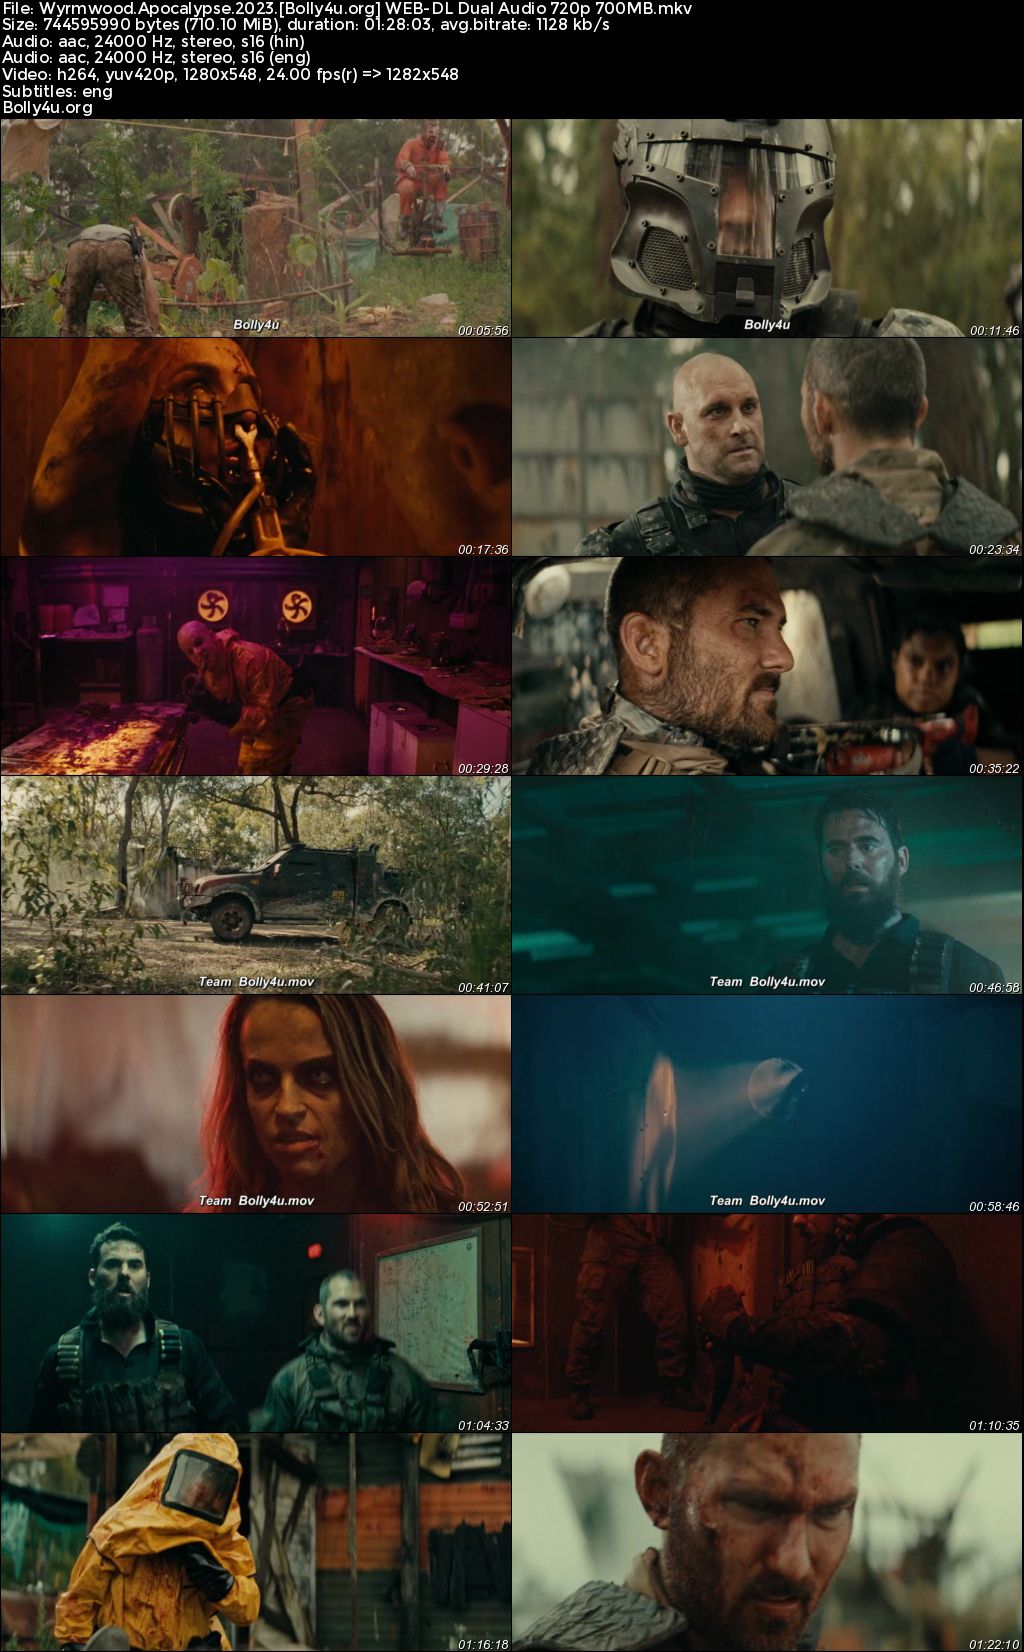 Wyrmwood Apocalypse 2021 WEB-DL Hindi Dual Audio ORG Full Movie Download 1080p 720p 480p